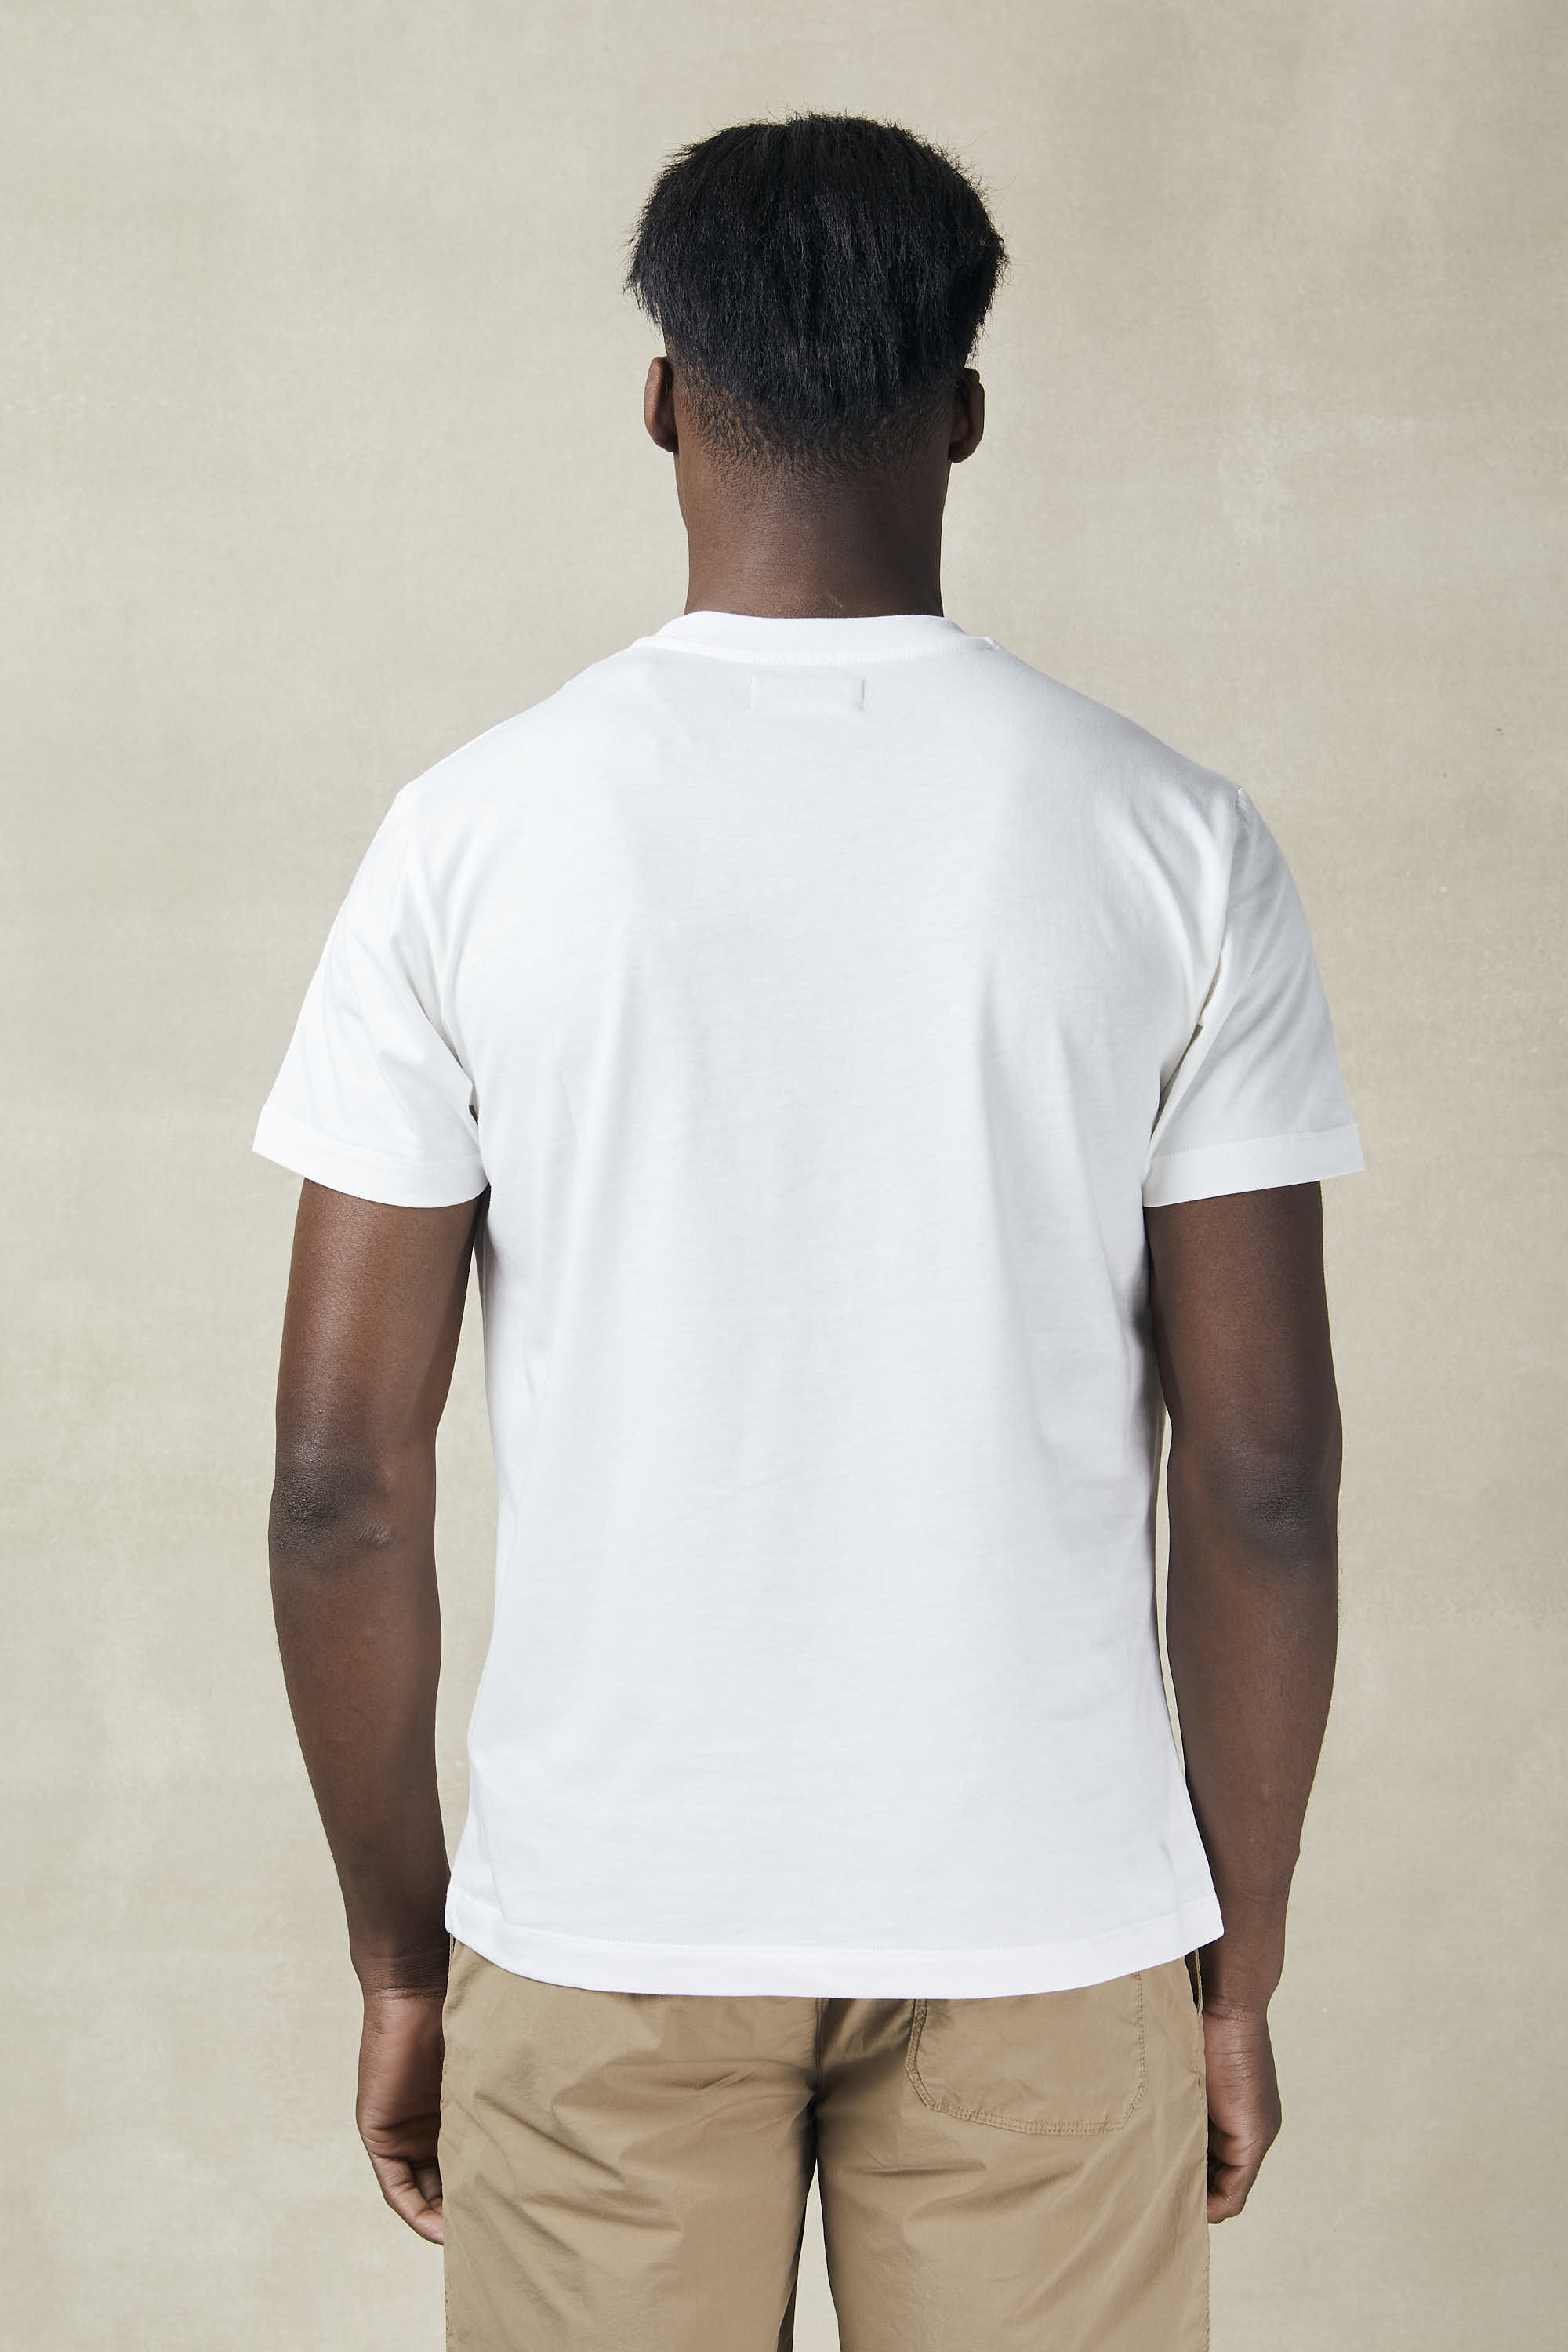 Monte Carlo cotton t-shirt - 3